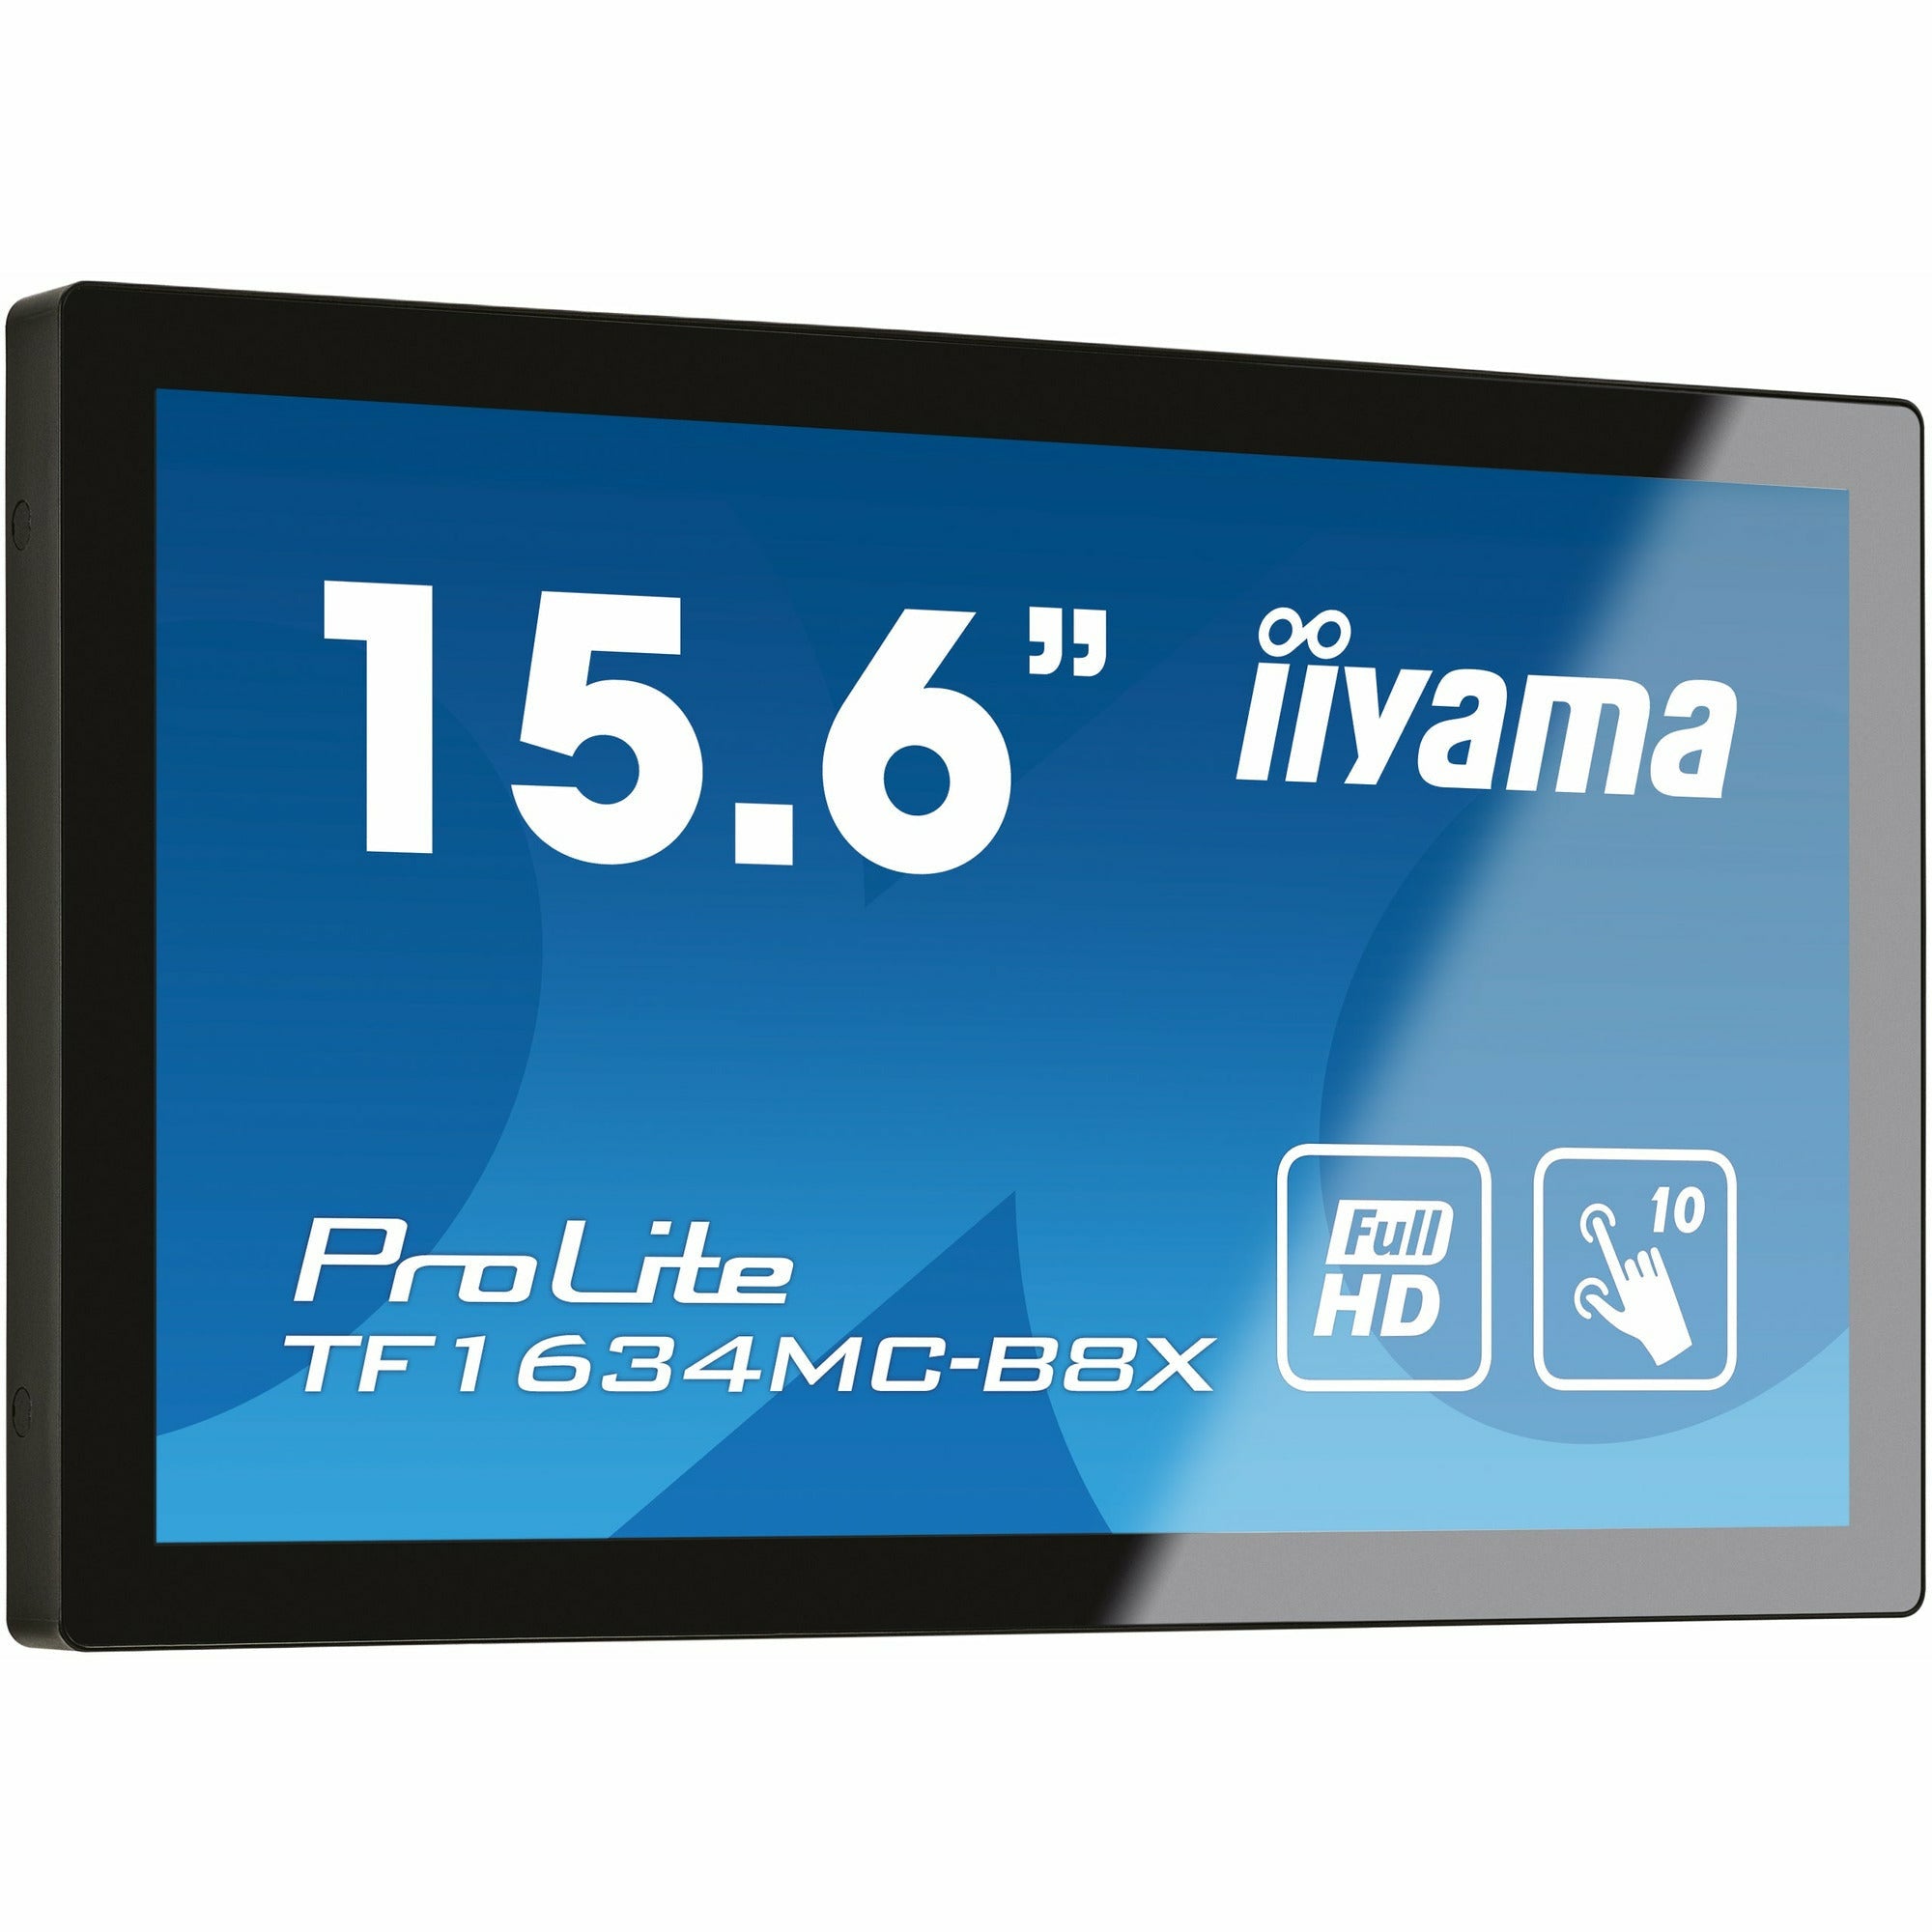 Iiyama ProLite TF1634MC-B8X 15.6" Full HD 10 point PCAP IPS Open Frame Touch Screen